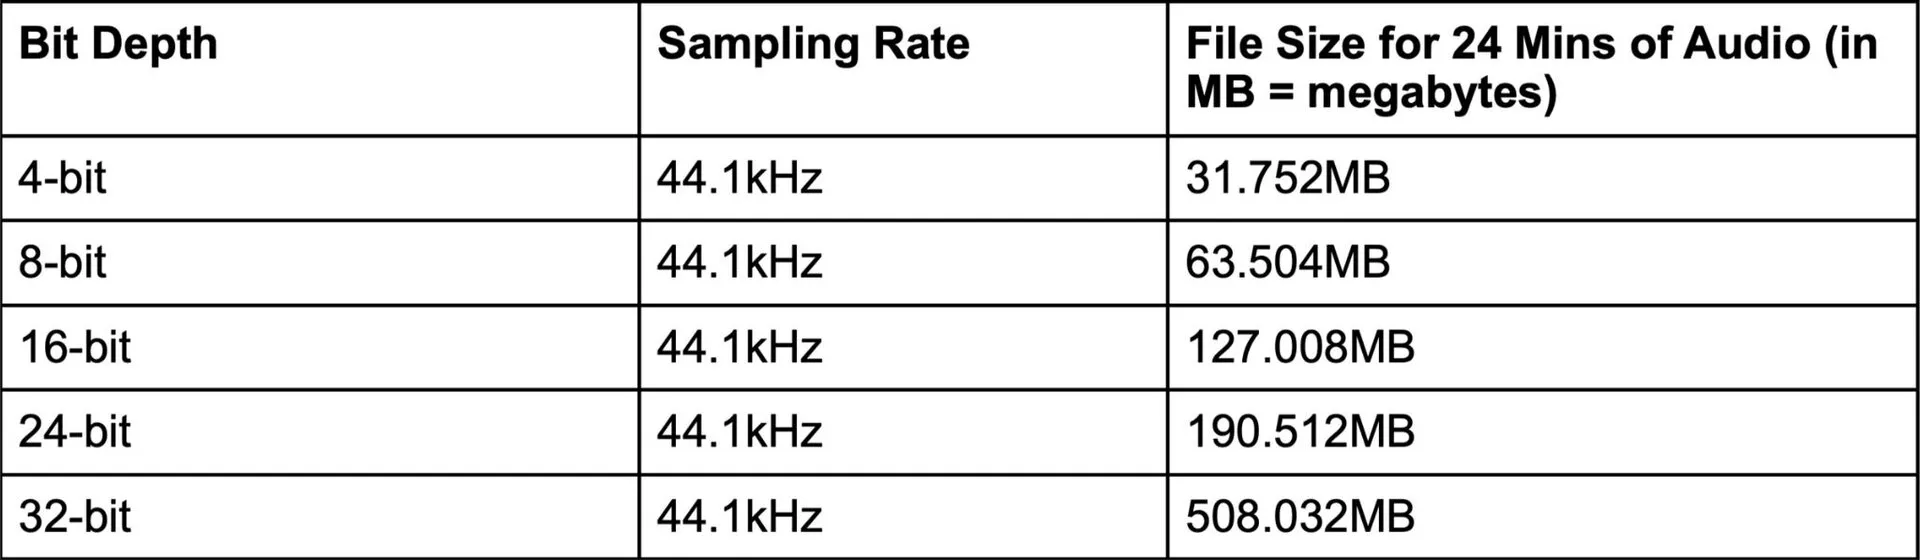 Audio bit depth file size per 24 mins of audio comparison